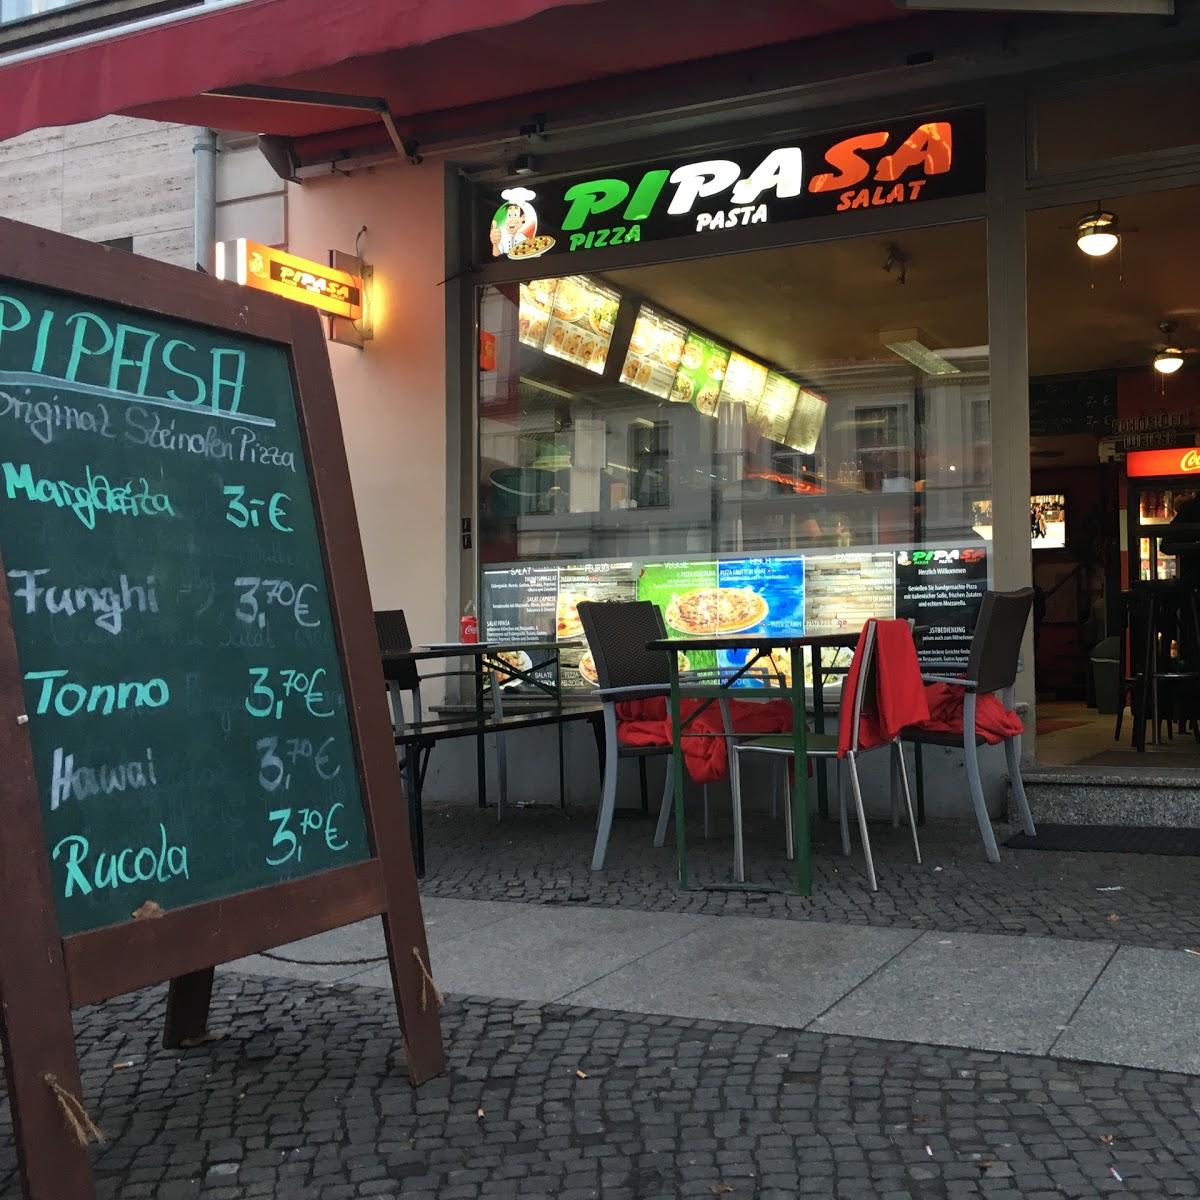 Restaurant "PiPaSa Pizza Pasta Salat" in Potsdam